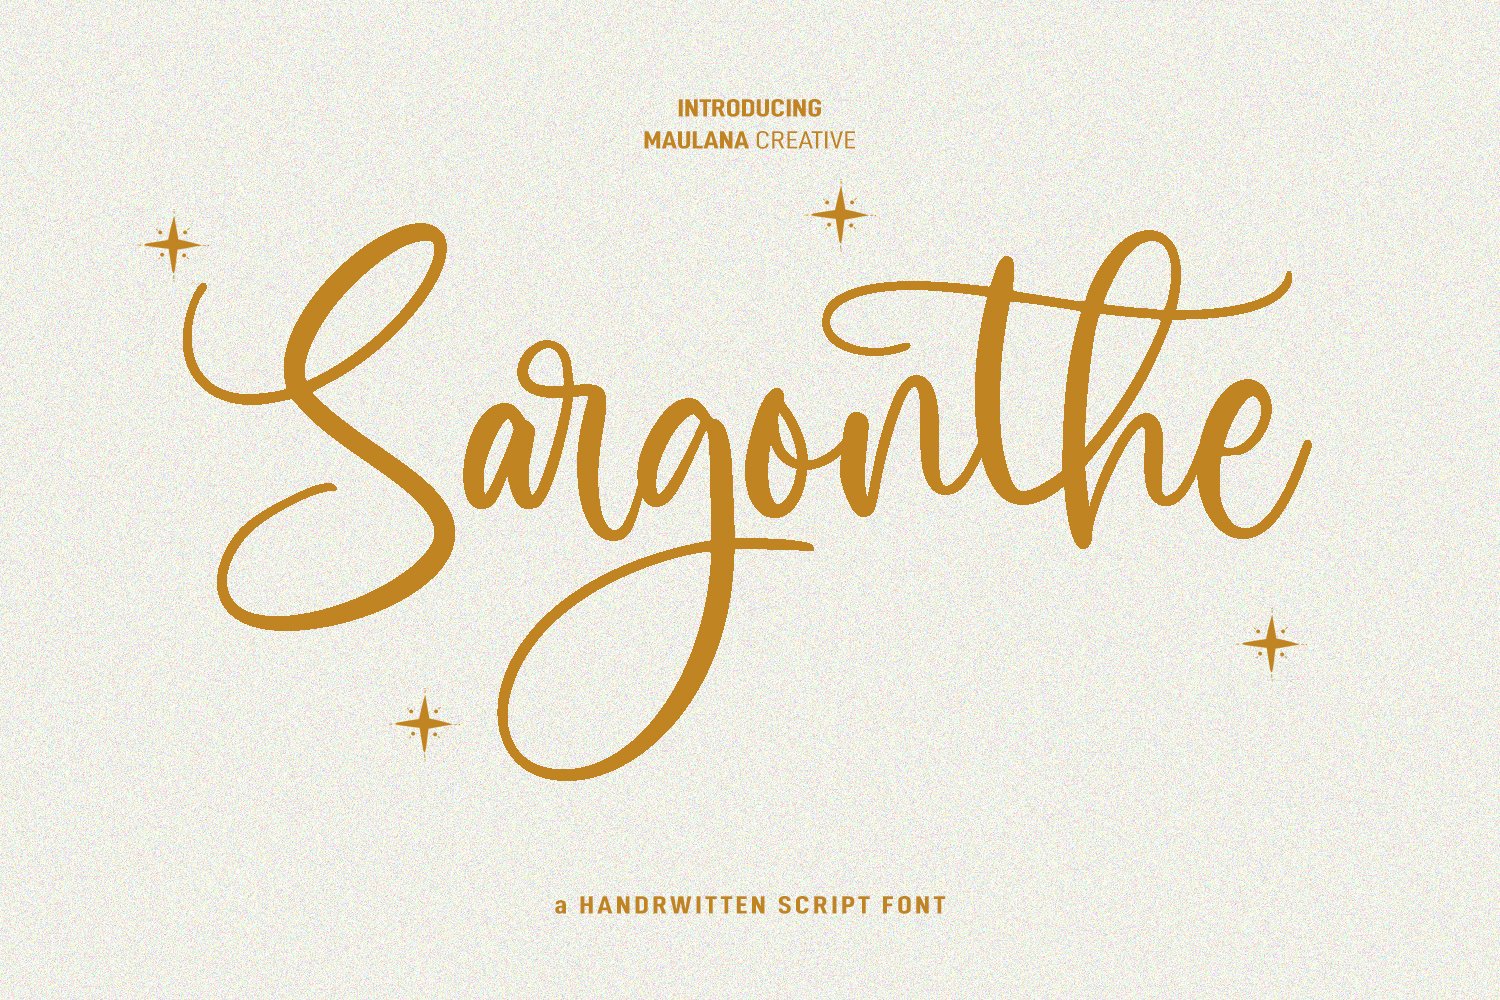 Sargonthe Script Font cover image.